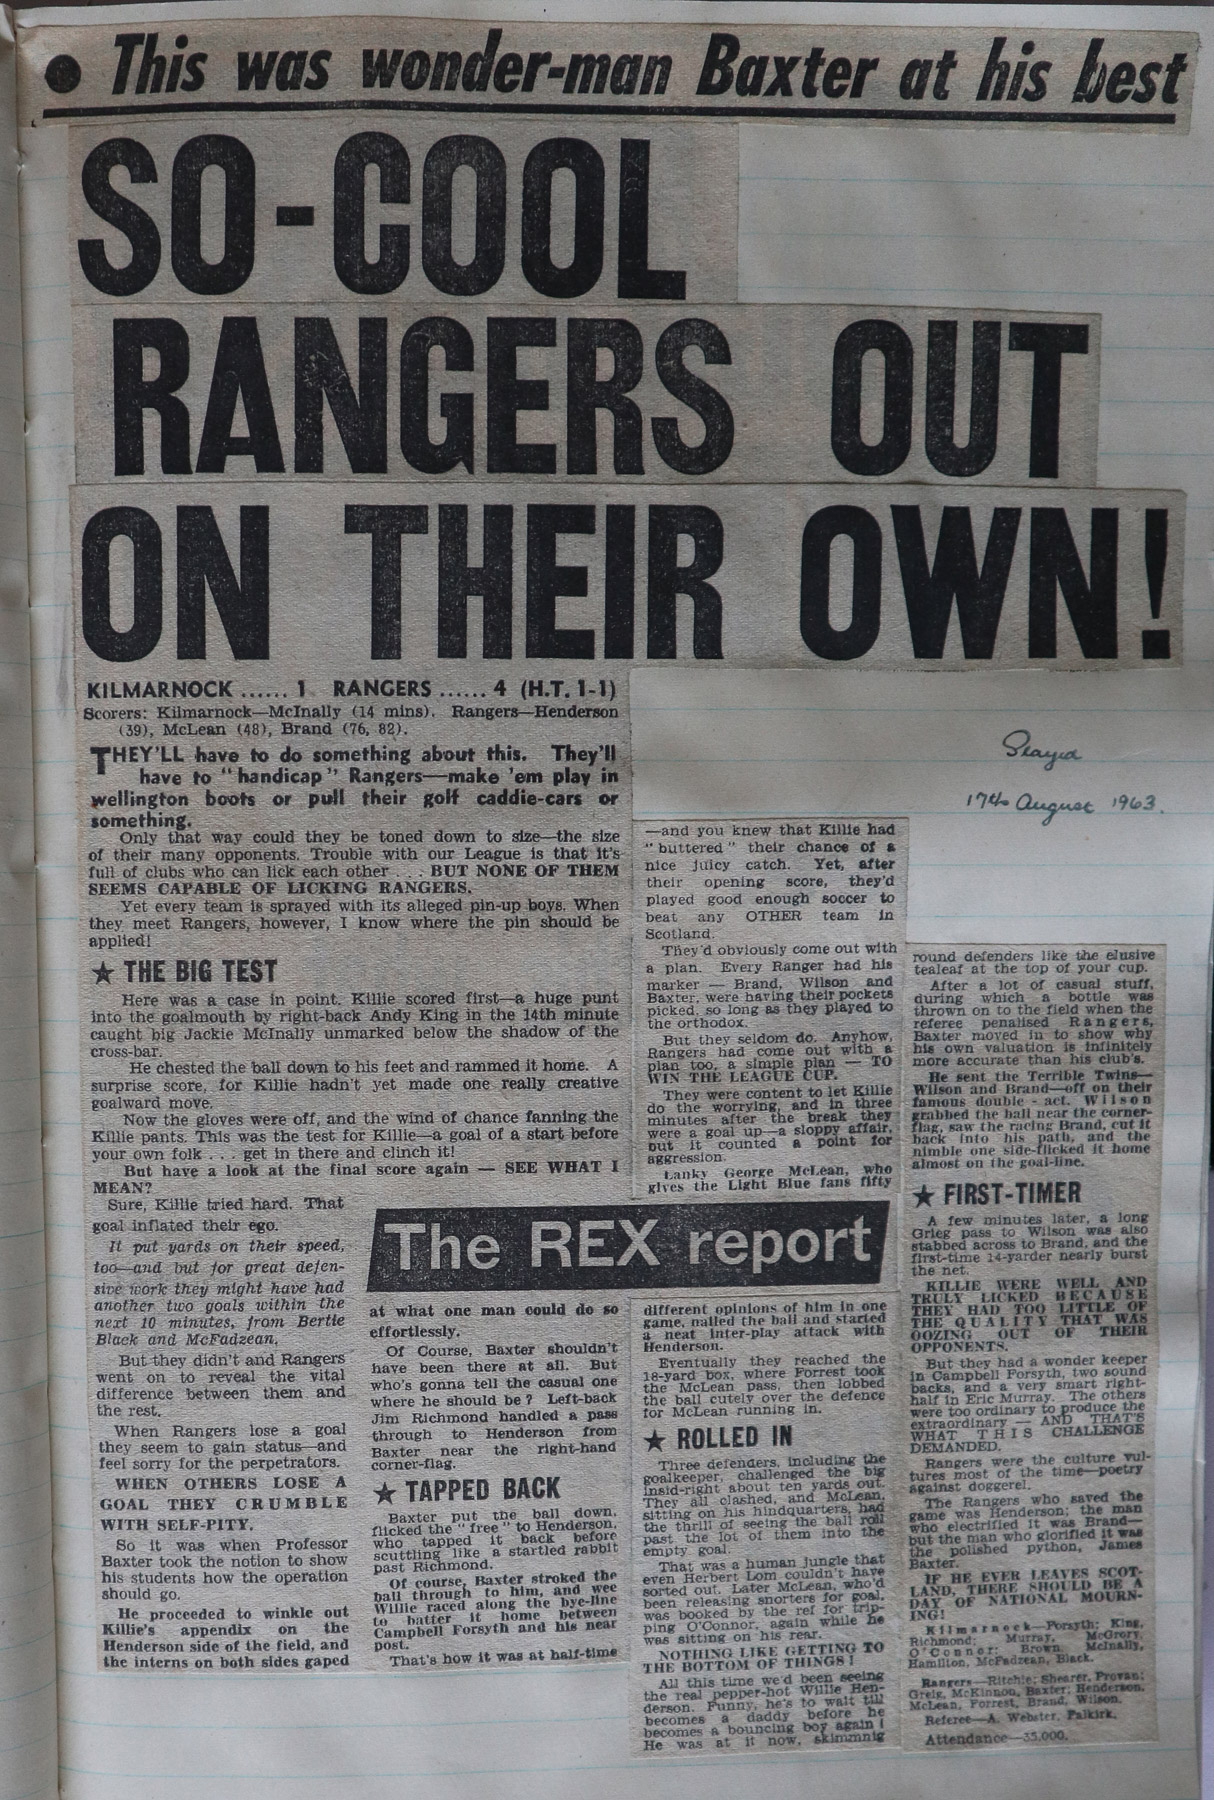 1963-08-17_Kilmarnock_1-4_Rangers_League_Cup_SE_1